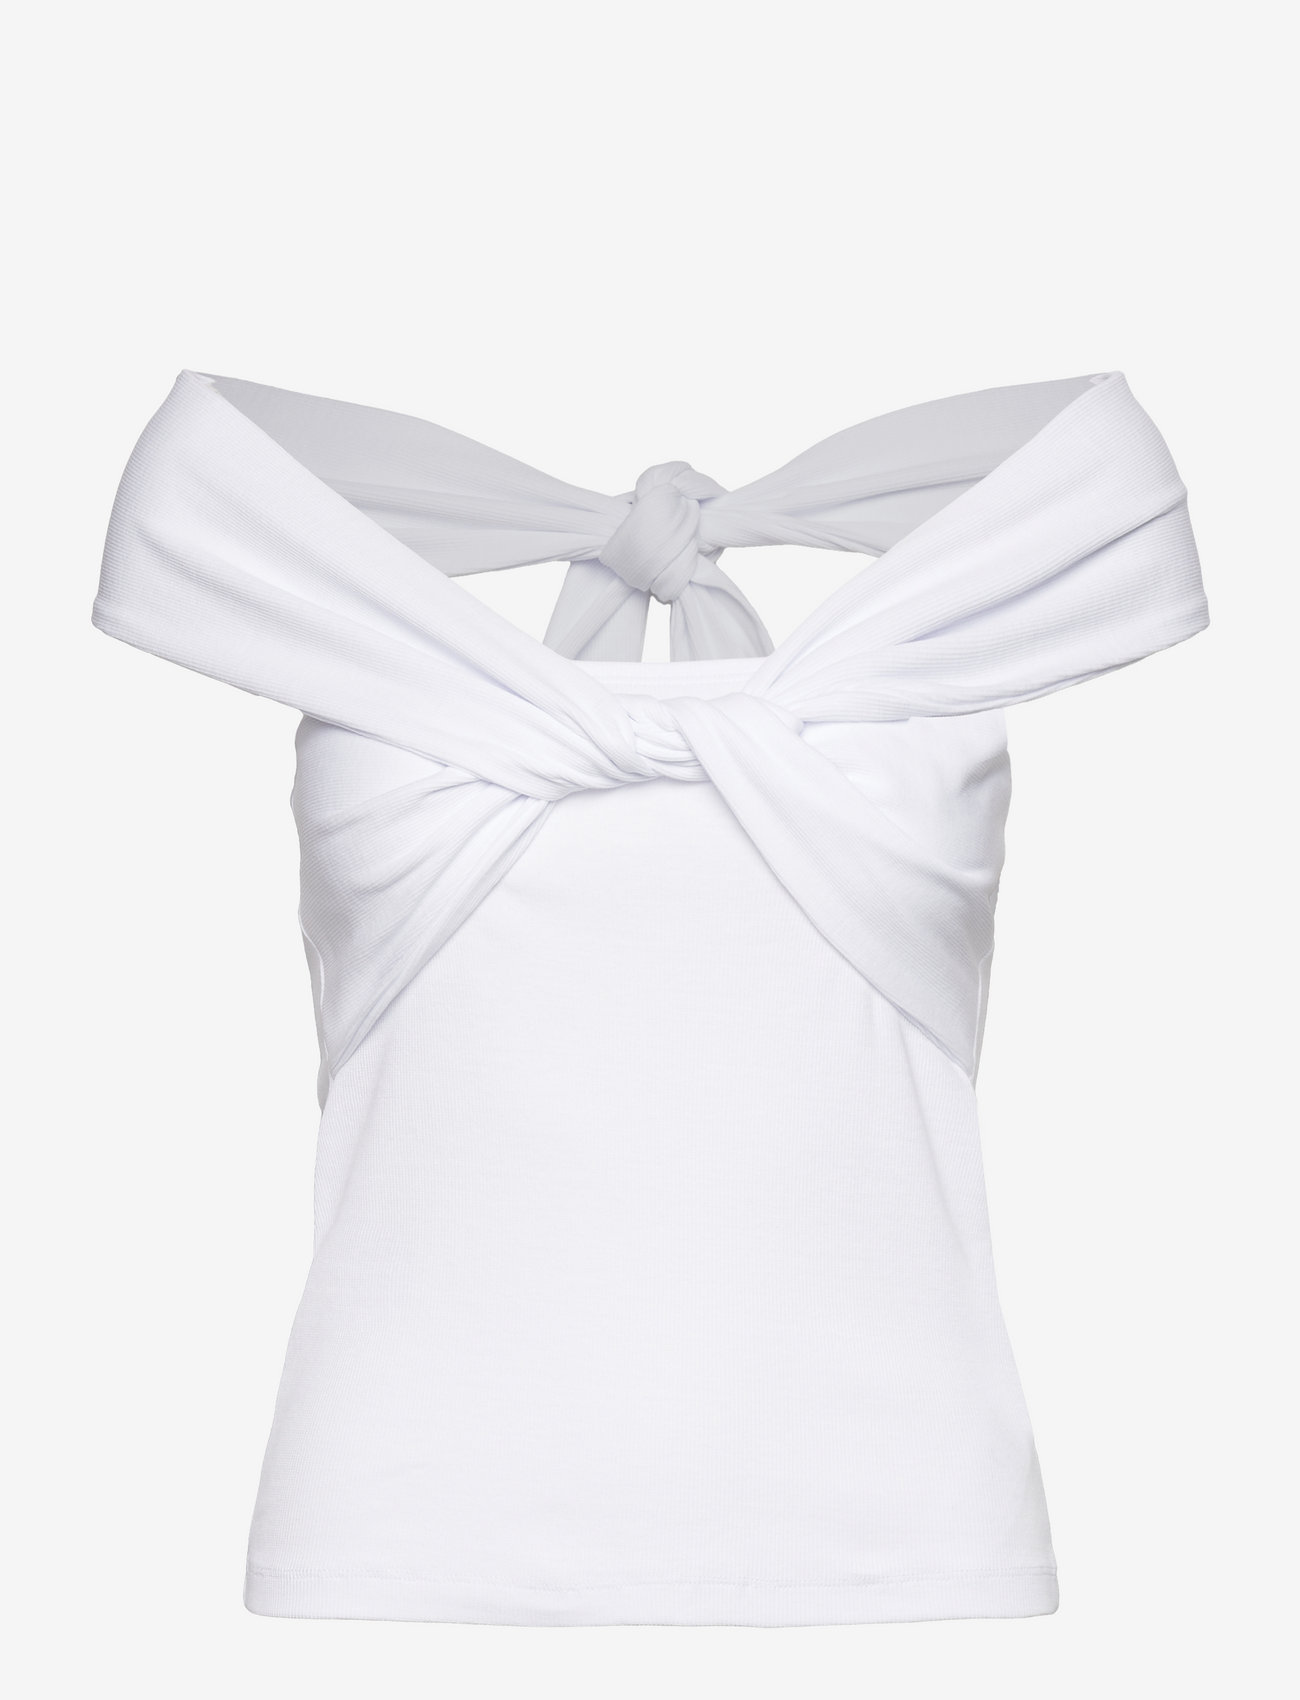 bzr - Fiona Crossover top - sleeveless tops - white - 0